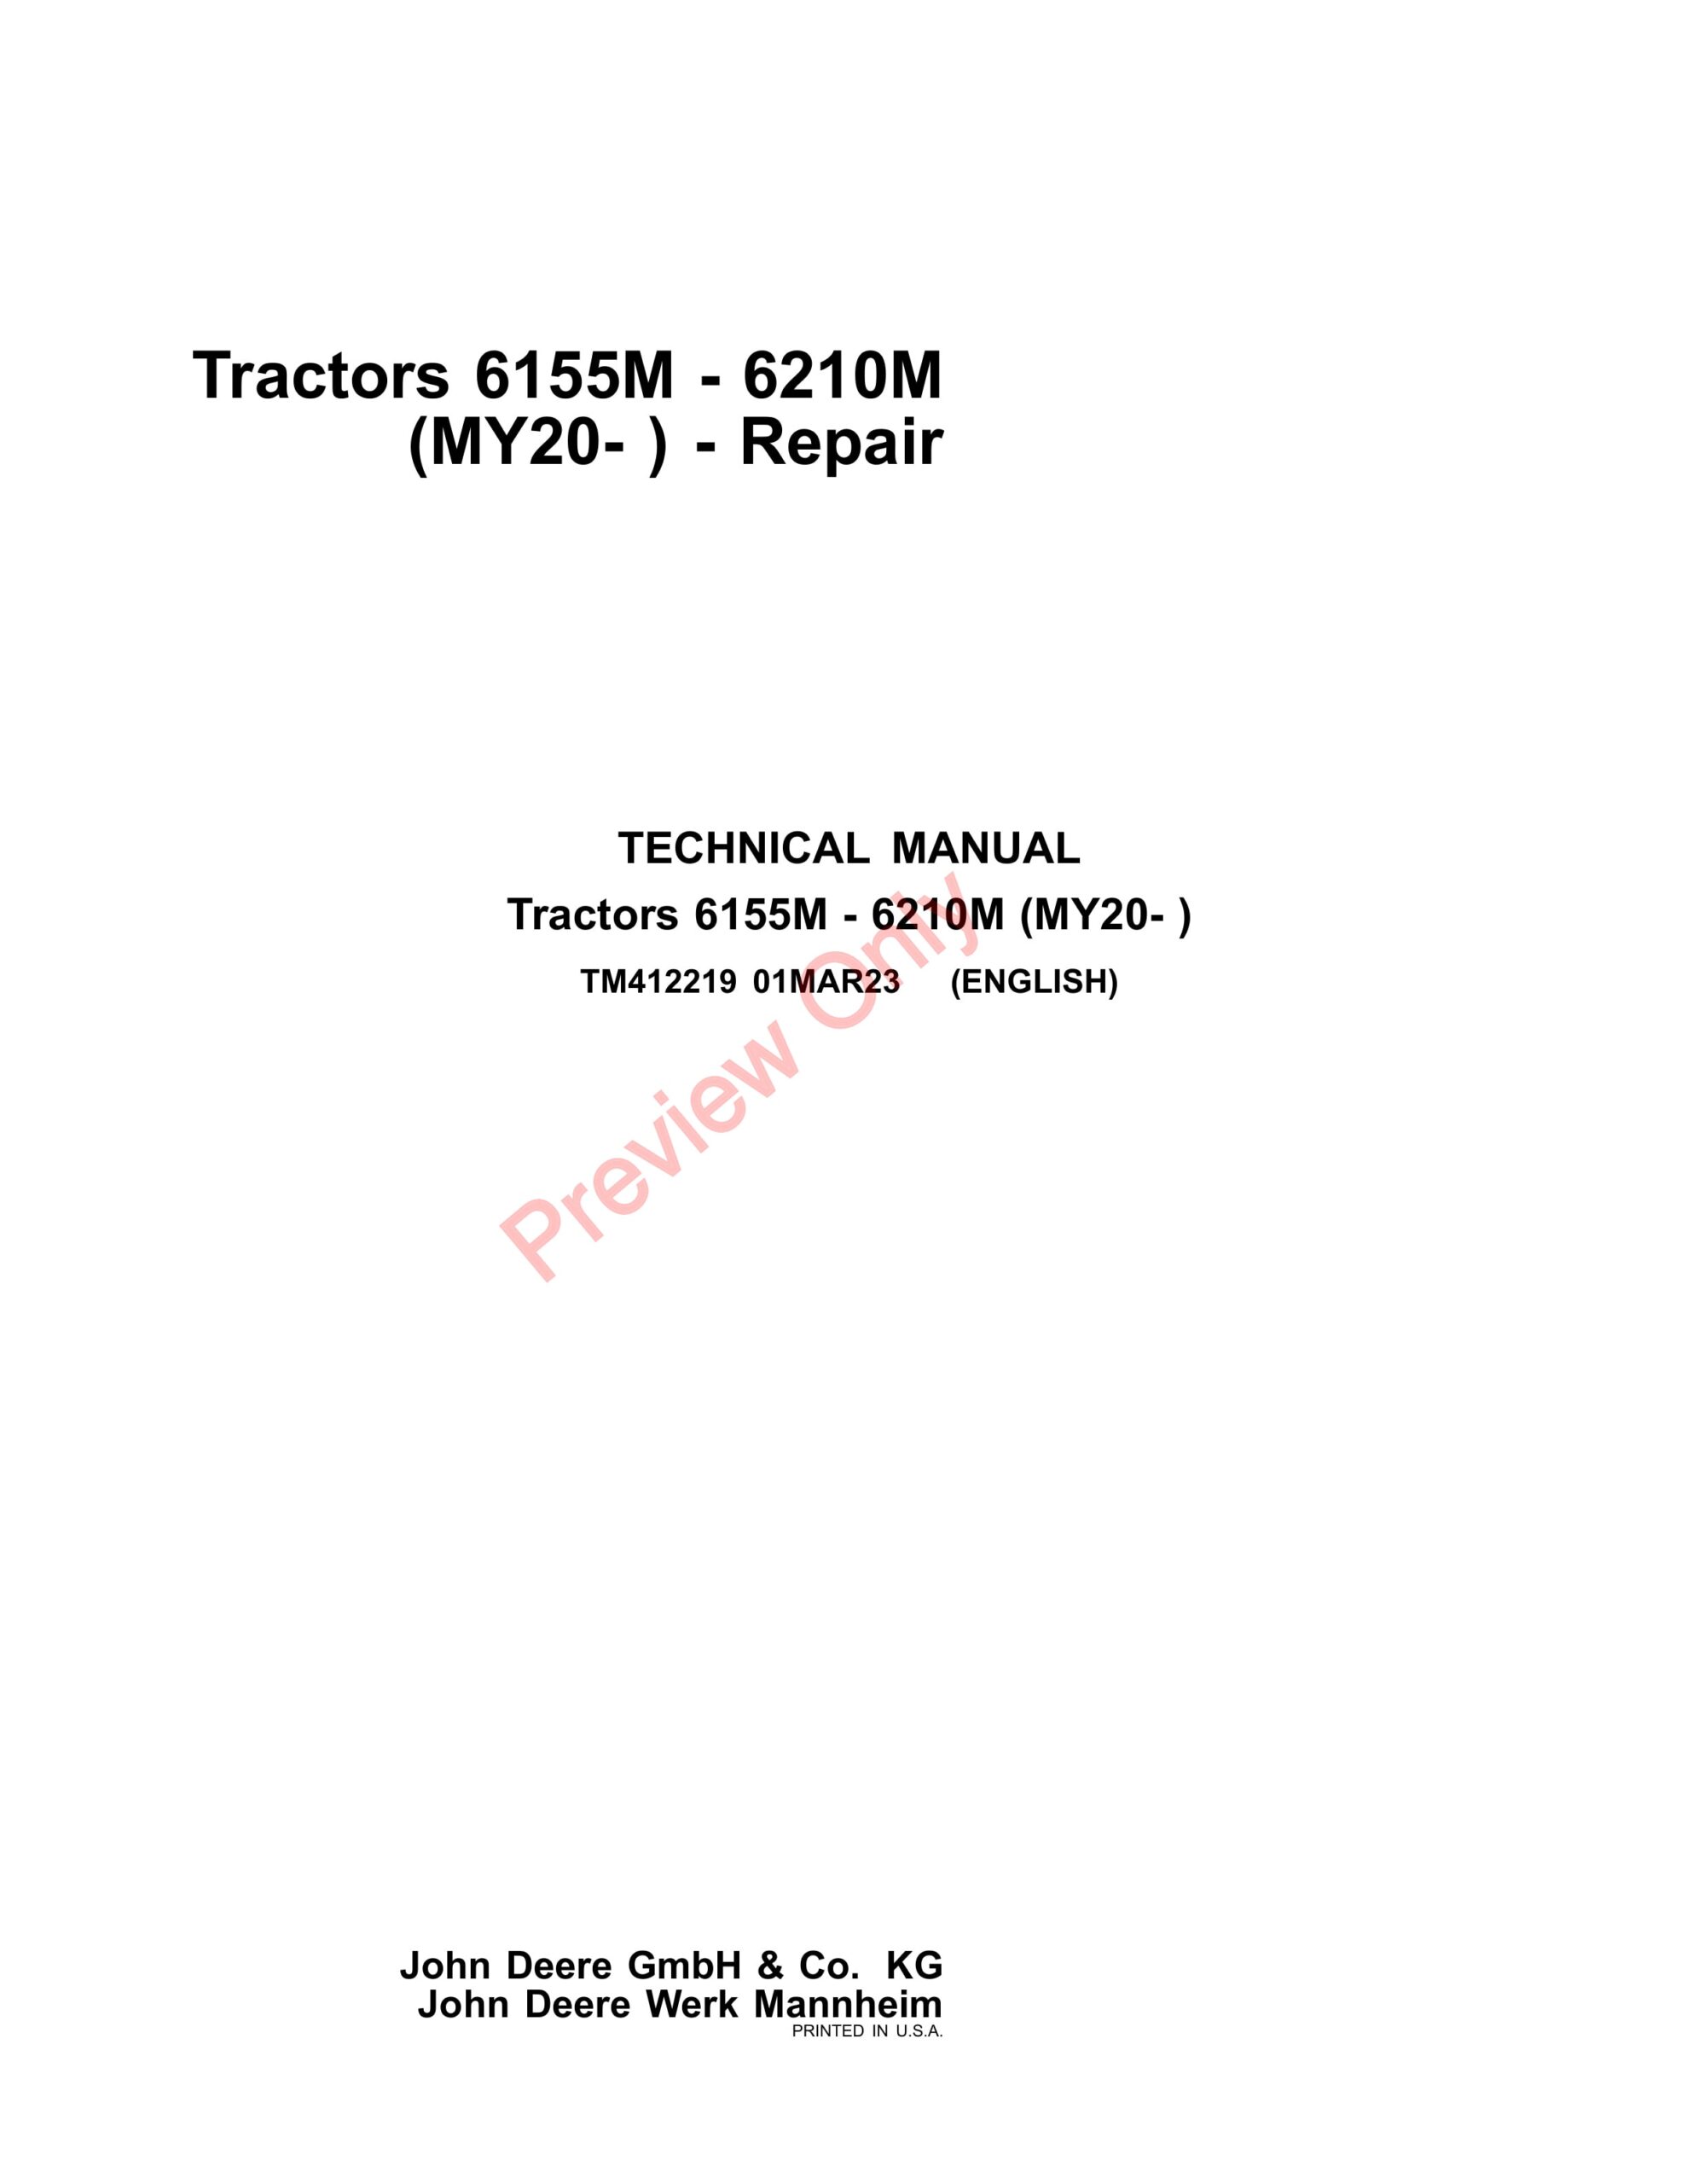 John Deere Tractors 6155M – 6210M (MY20-) Technical Manual TM412219 01MAR23-1